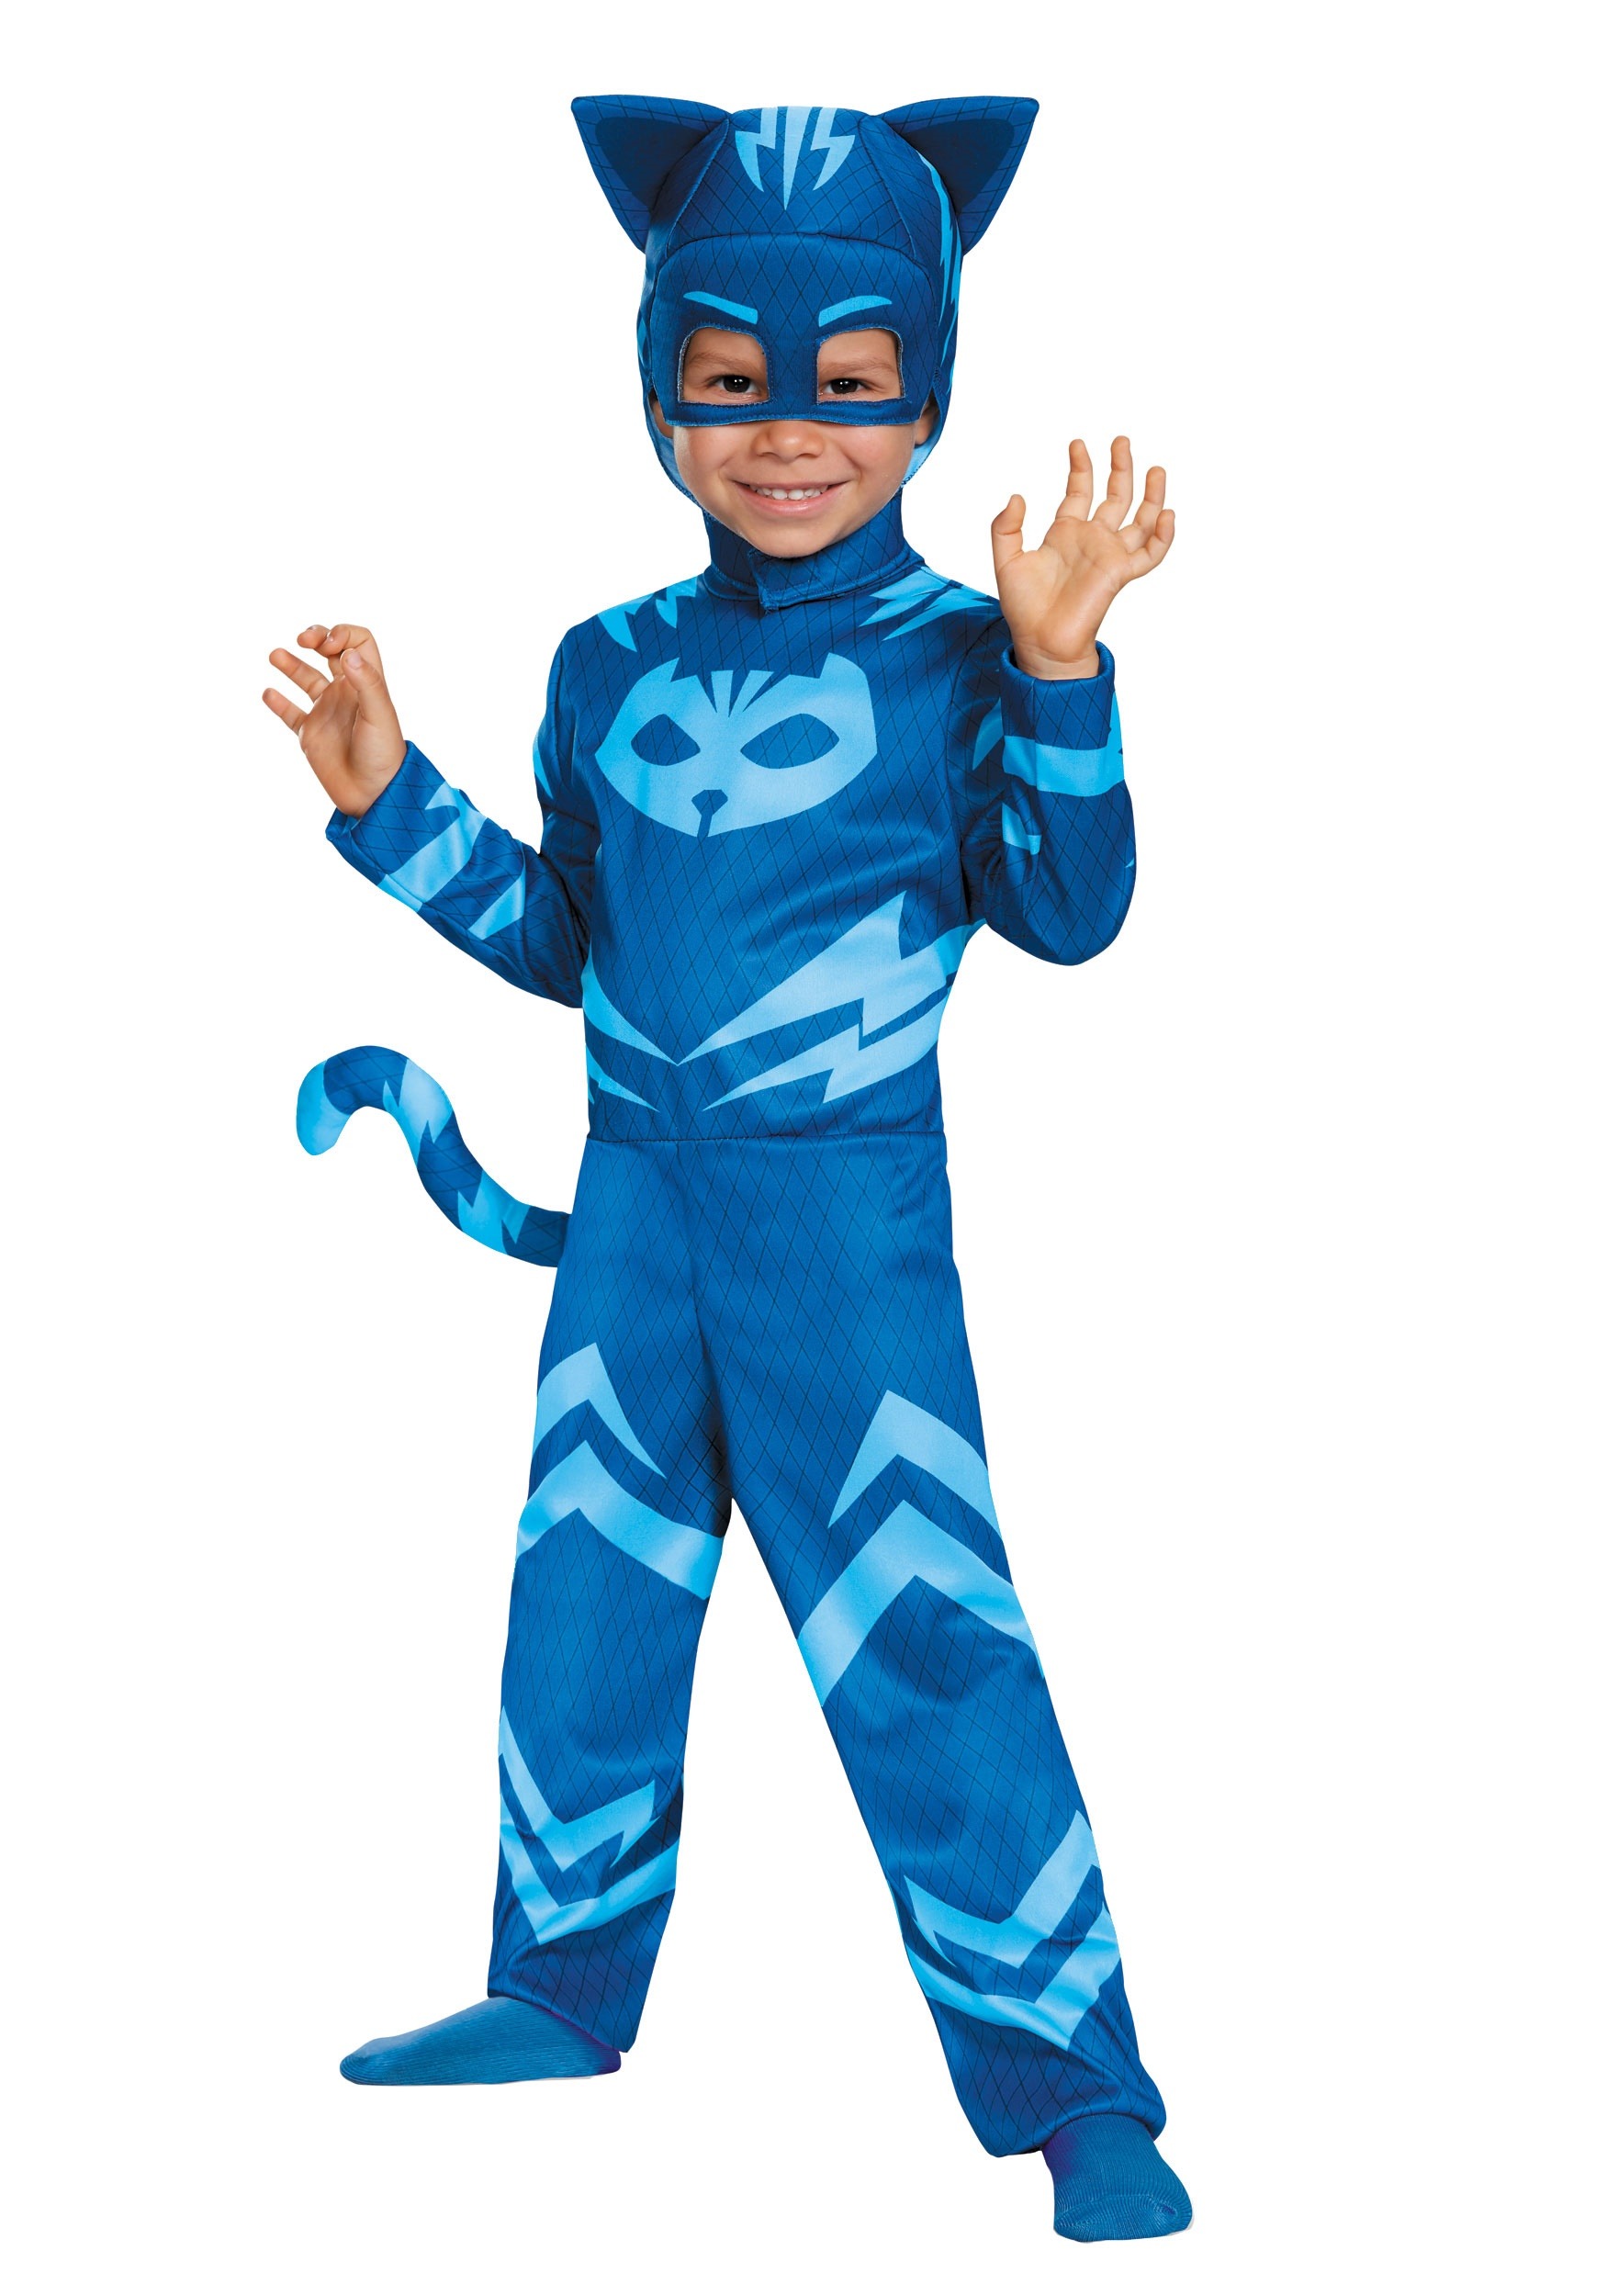 Photos - Fancy Dress PJ Masks Disguise  Classic Catboy Costume for Kids Blue DI17145 